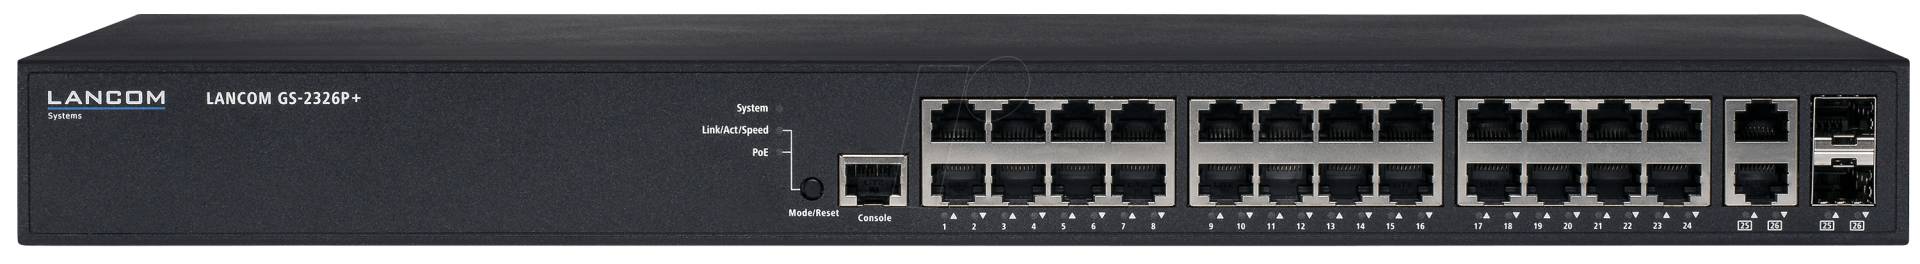 LANCOM GS-2326P+ - Switch, 24-Port, Gigabit Ethernet, PoE, SFP von Lancom